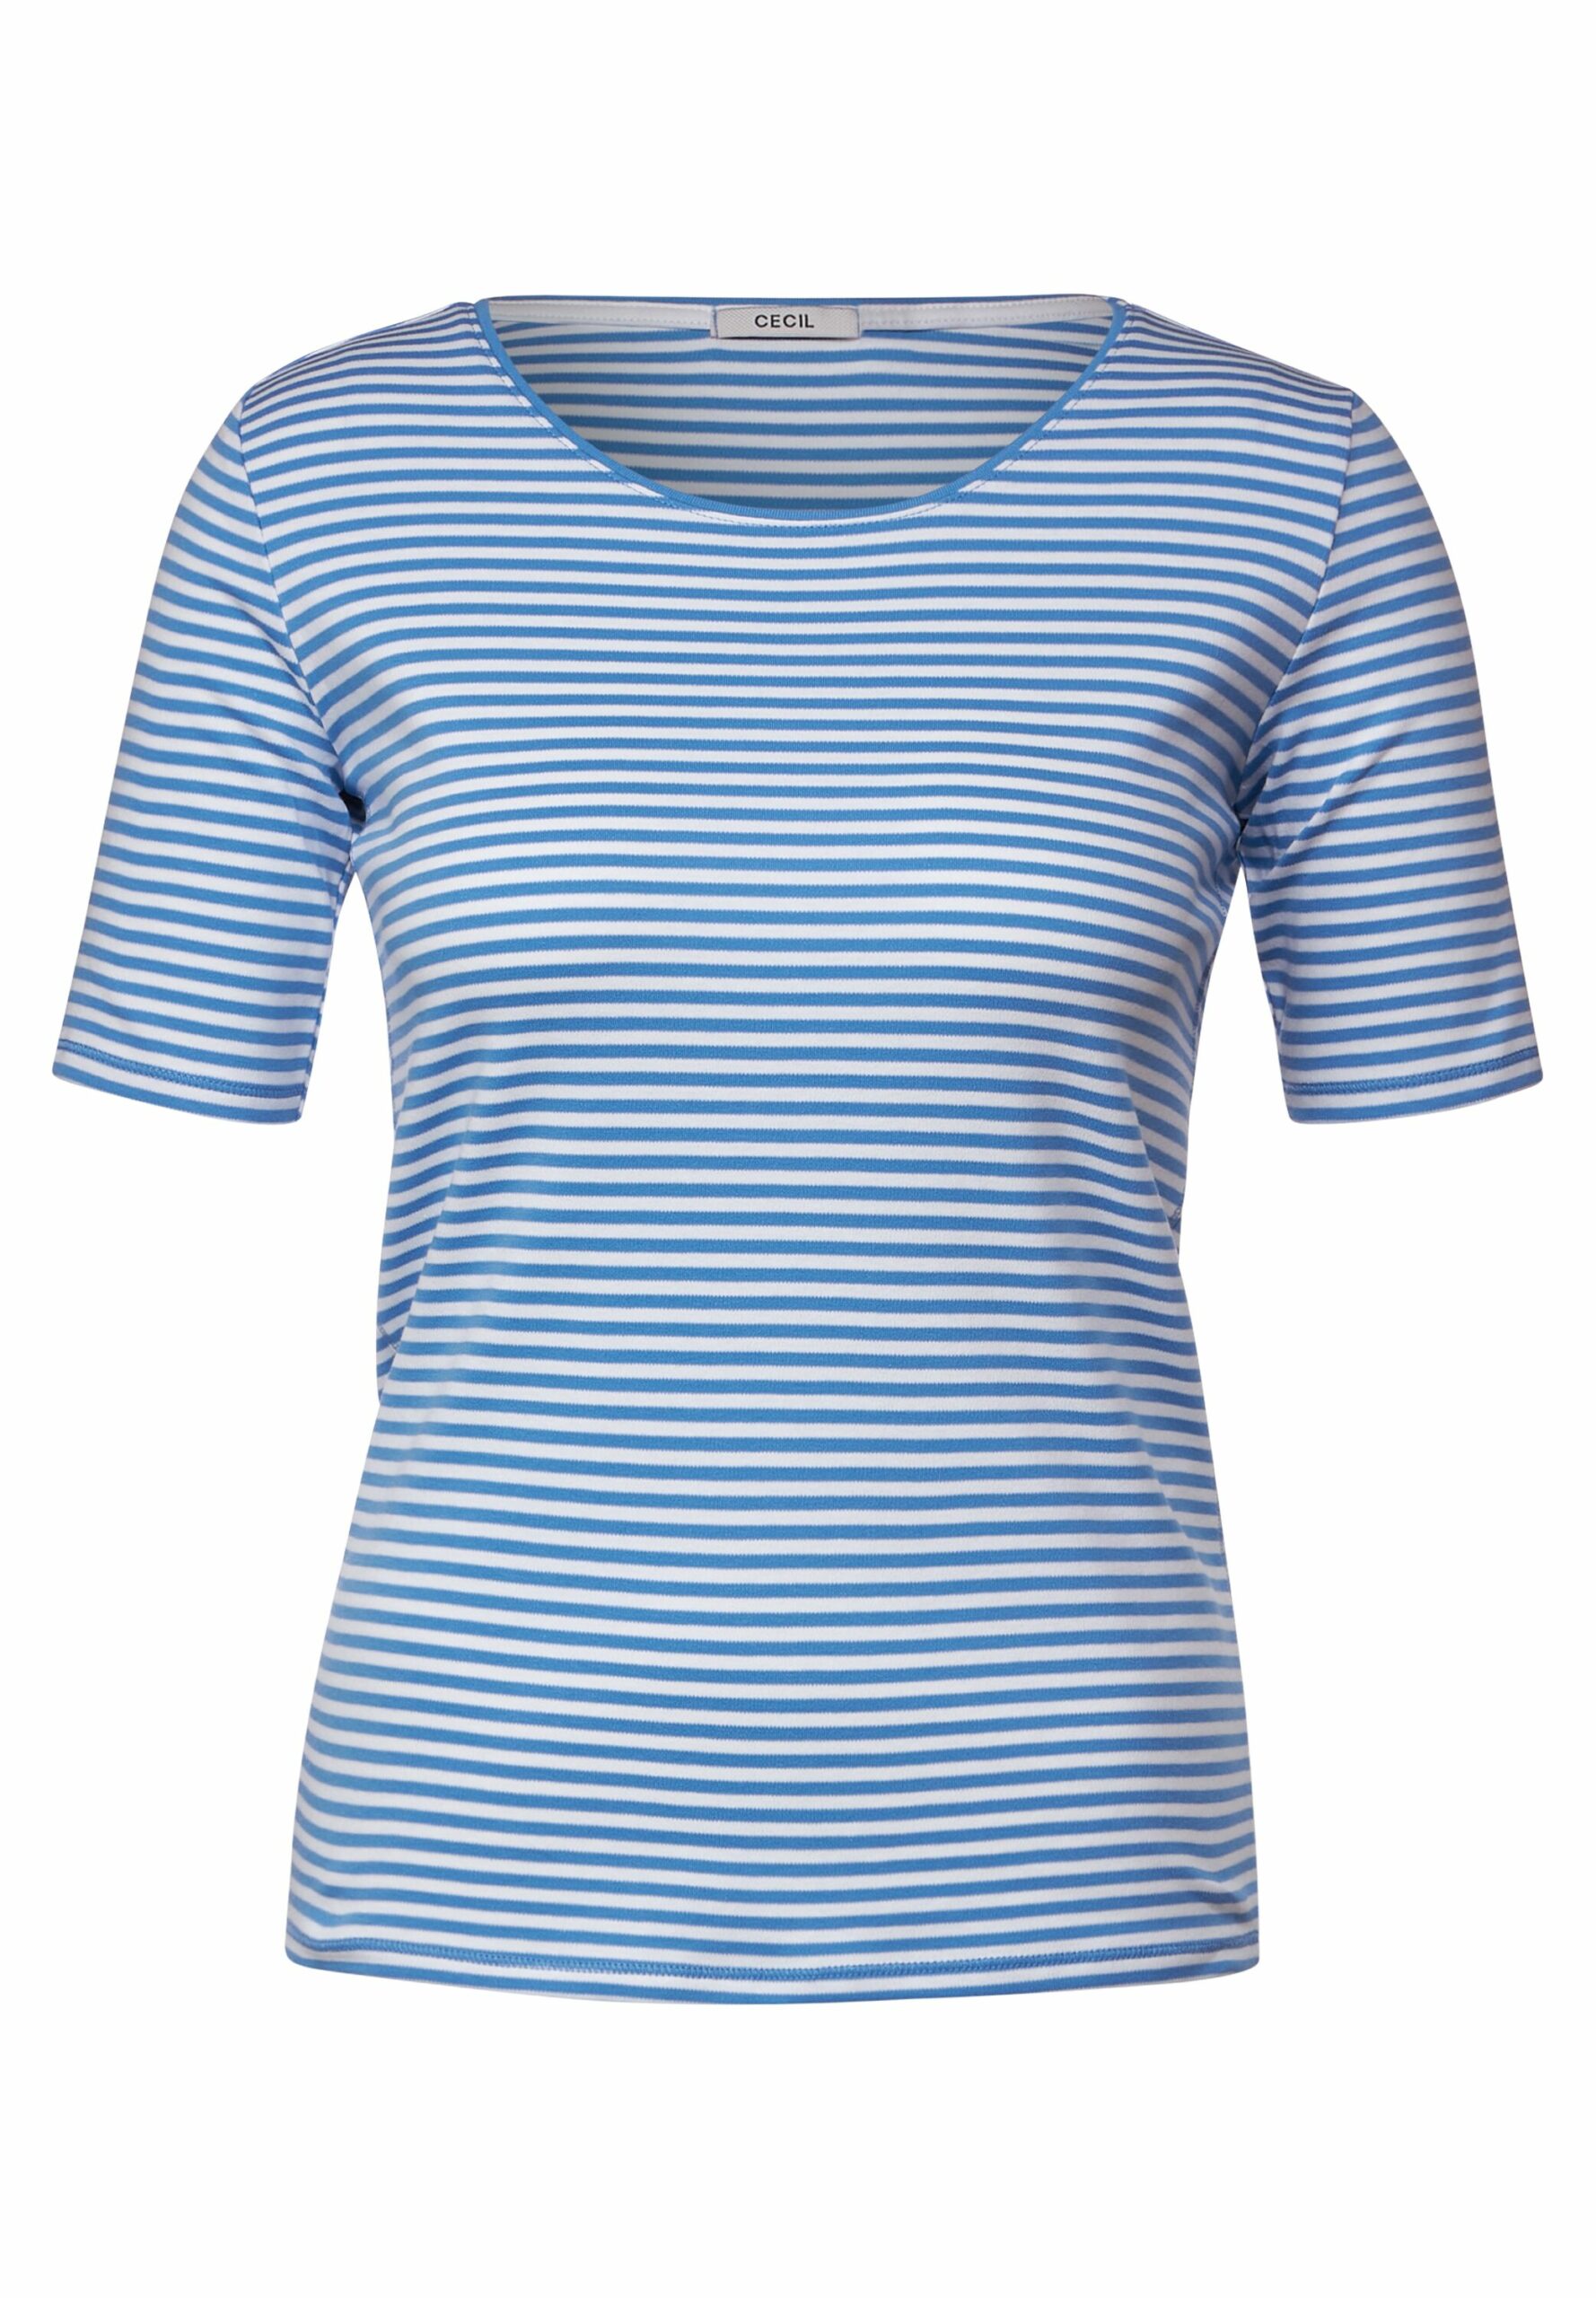 CECIL Damen - Kamlage Webshop Modehaus T-Shirt